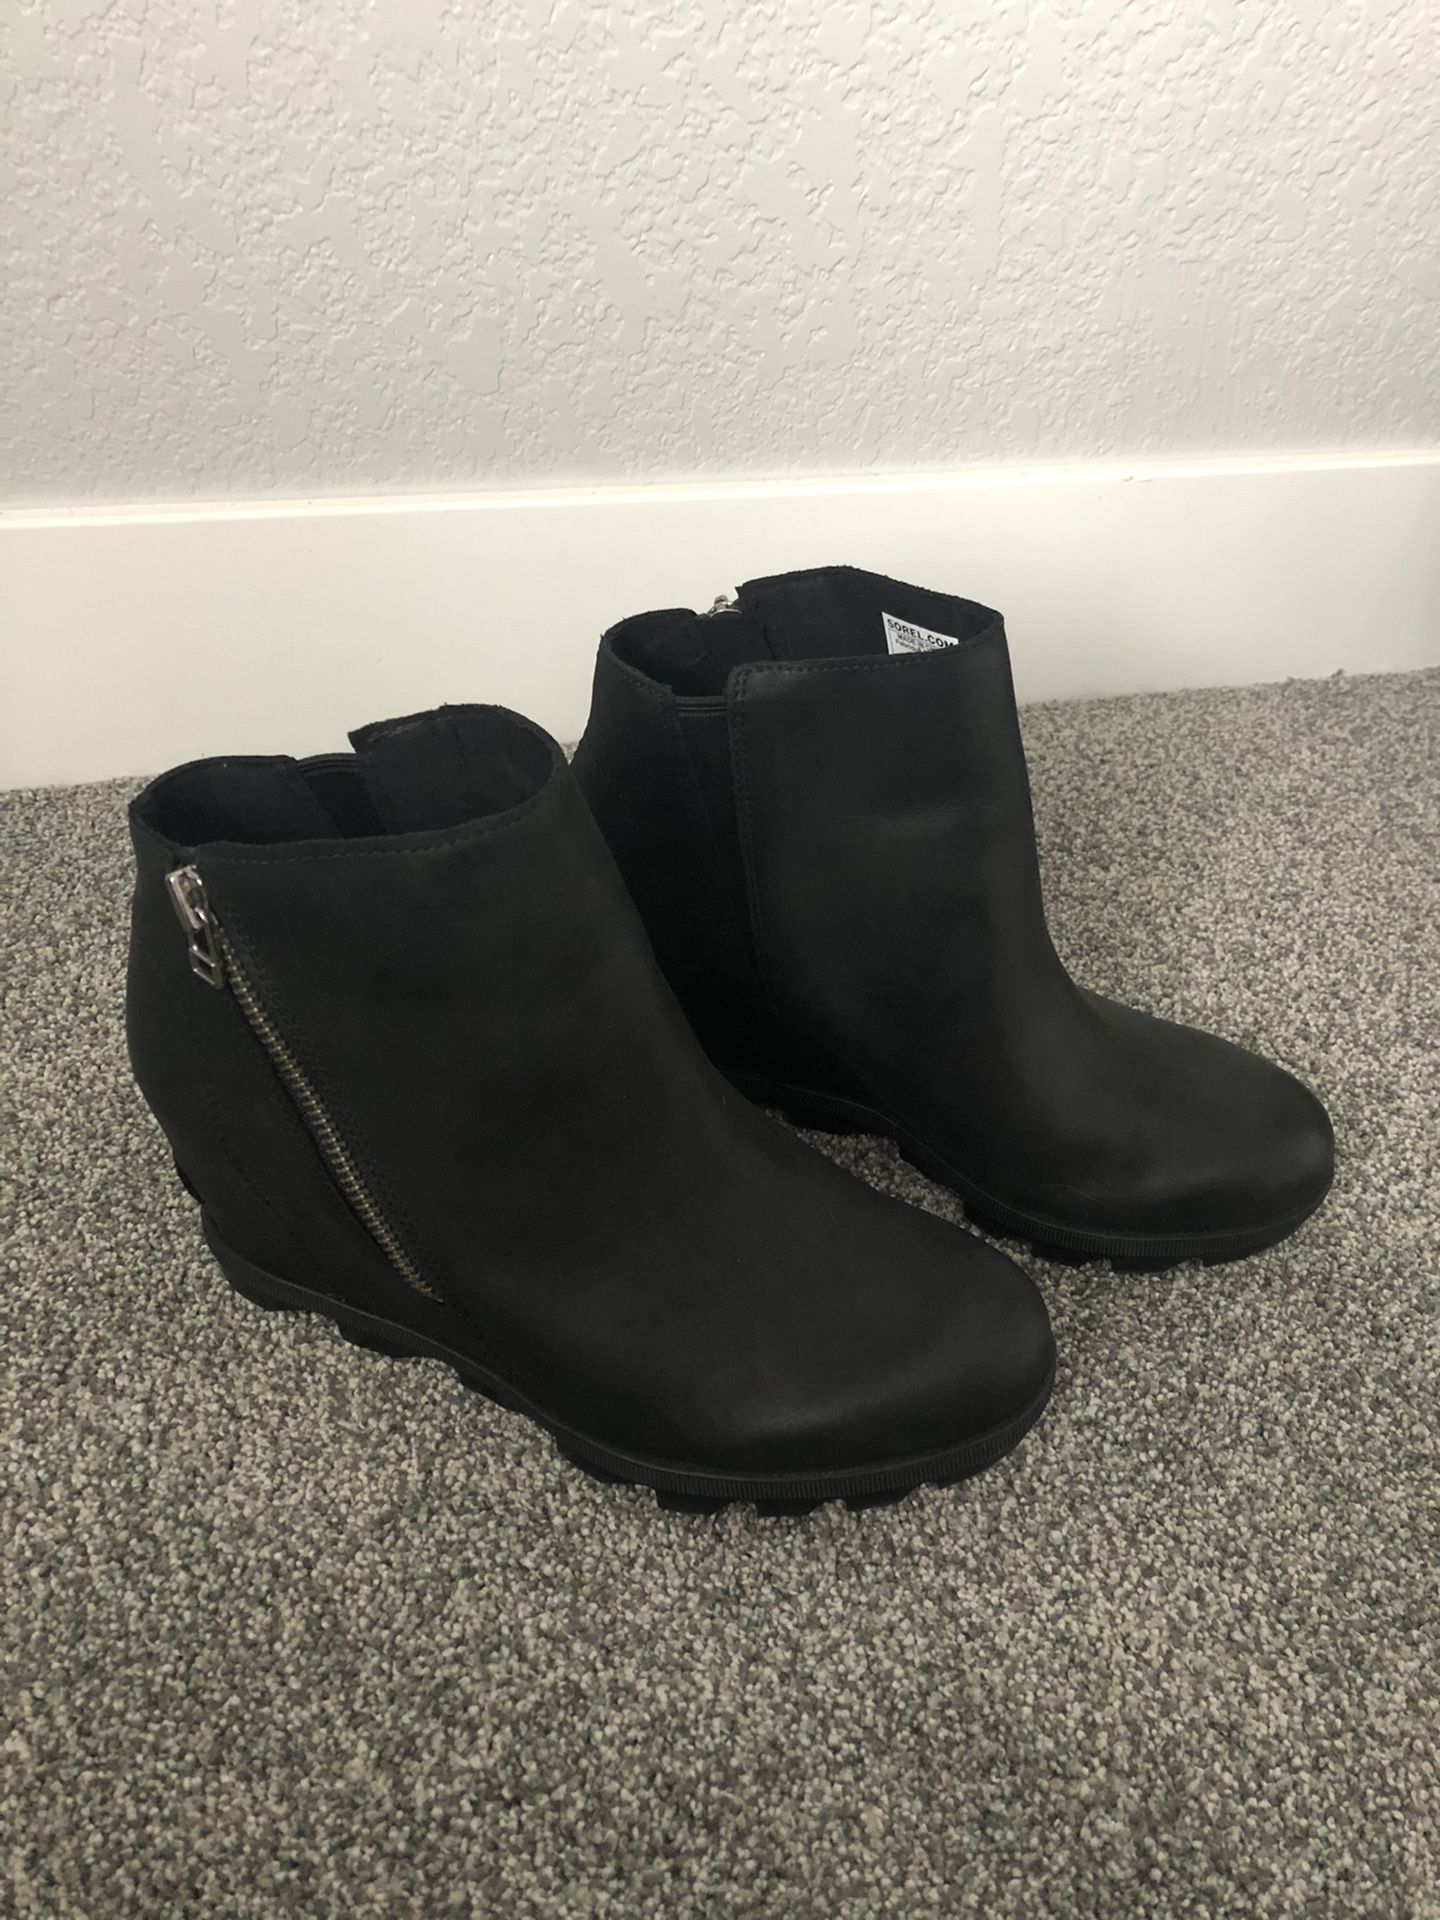 Sorel Joan of arc Wedge boot- Size 9.5